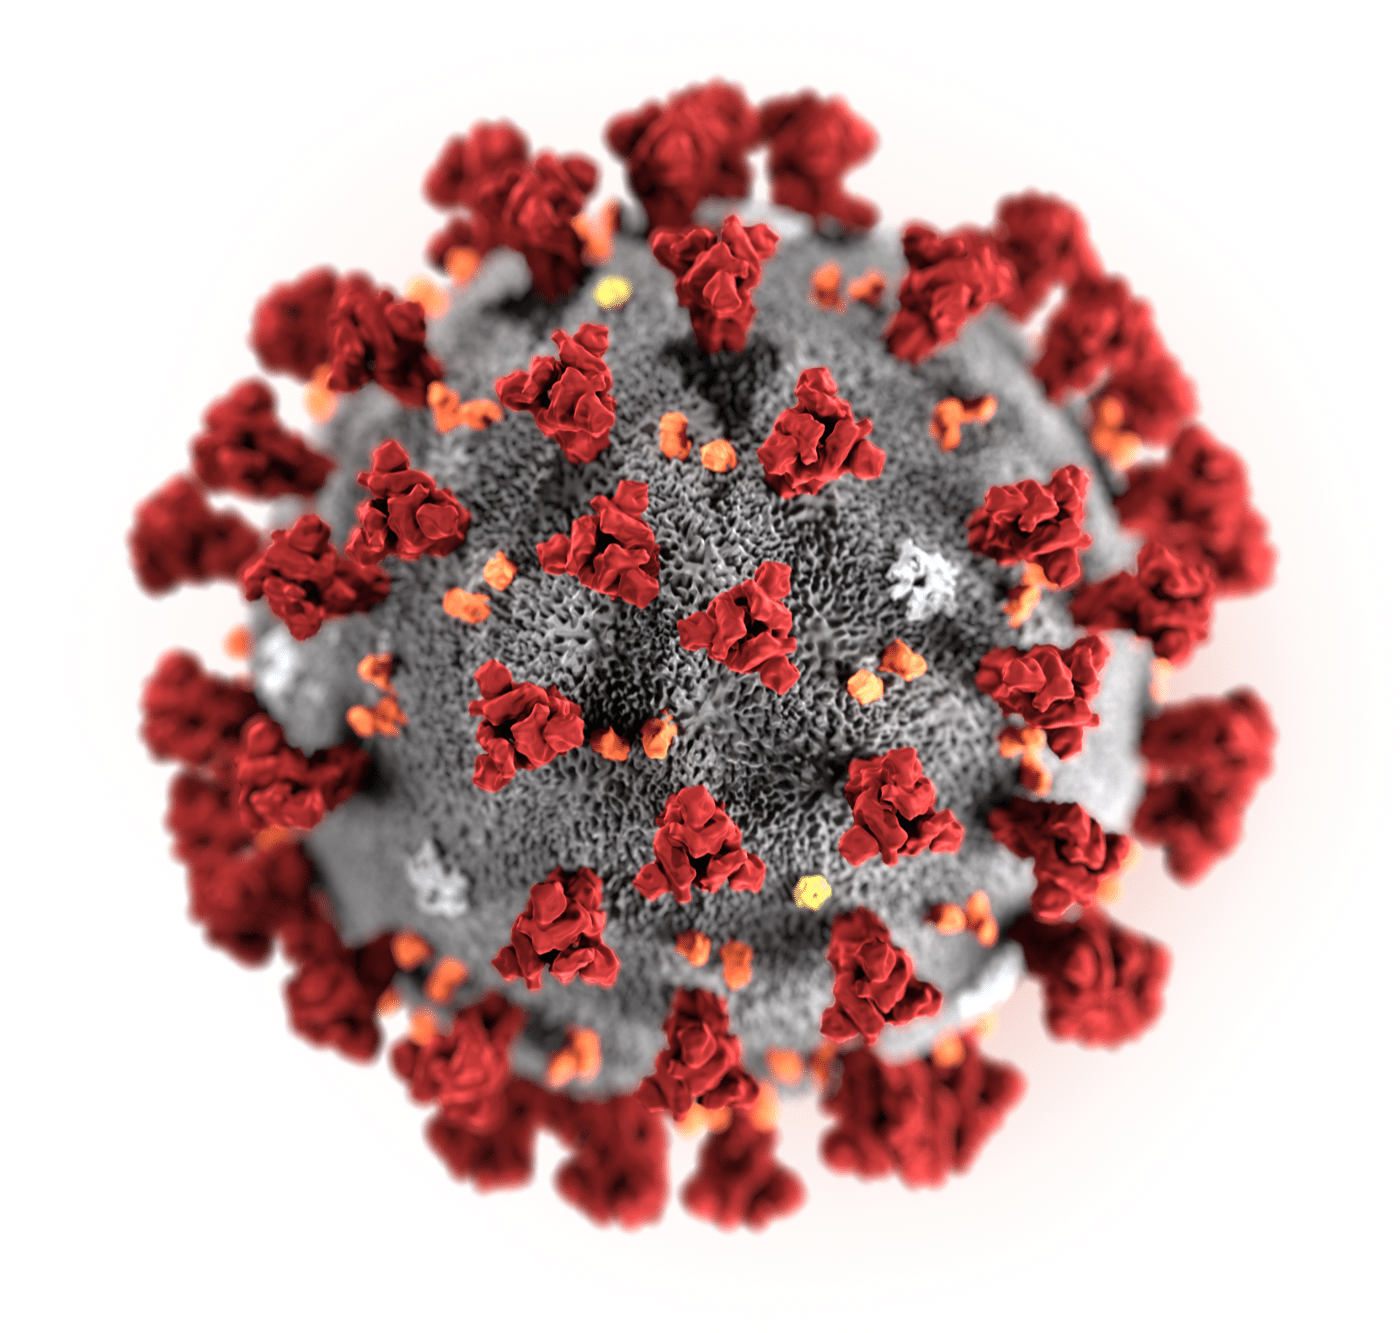 First coronavirus death confirmed in the U.S.